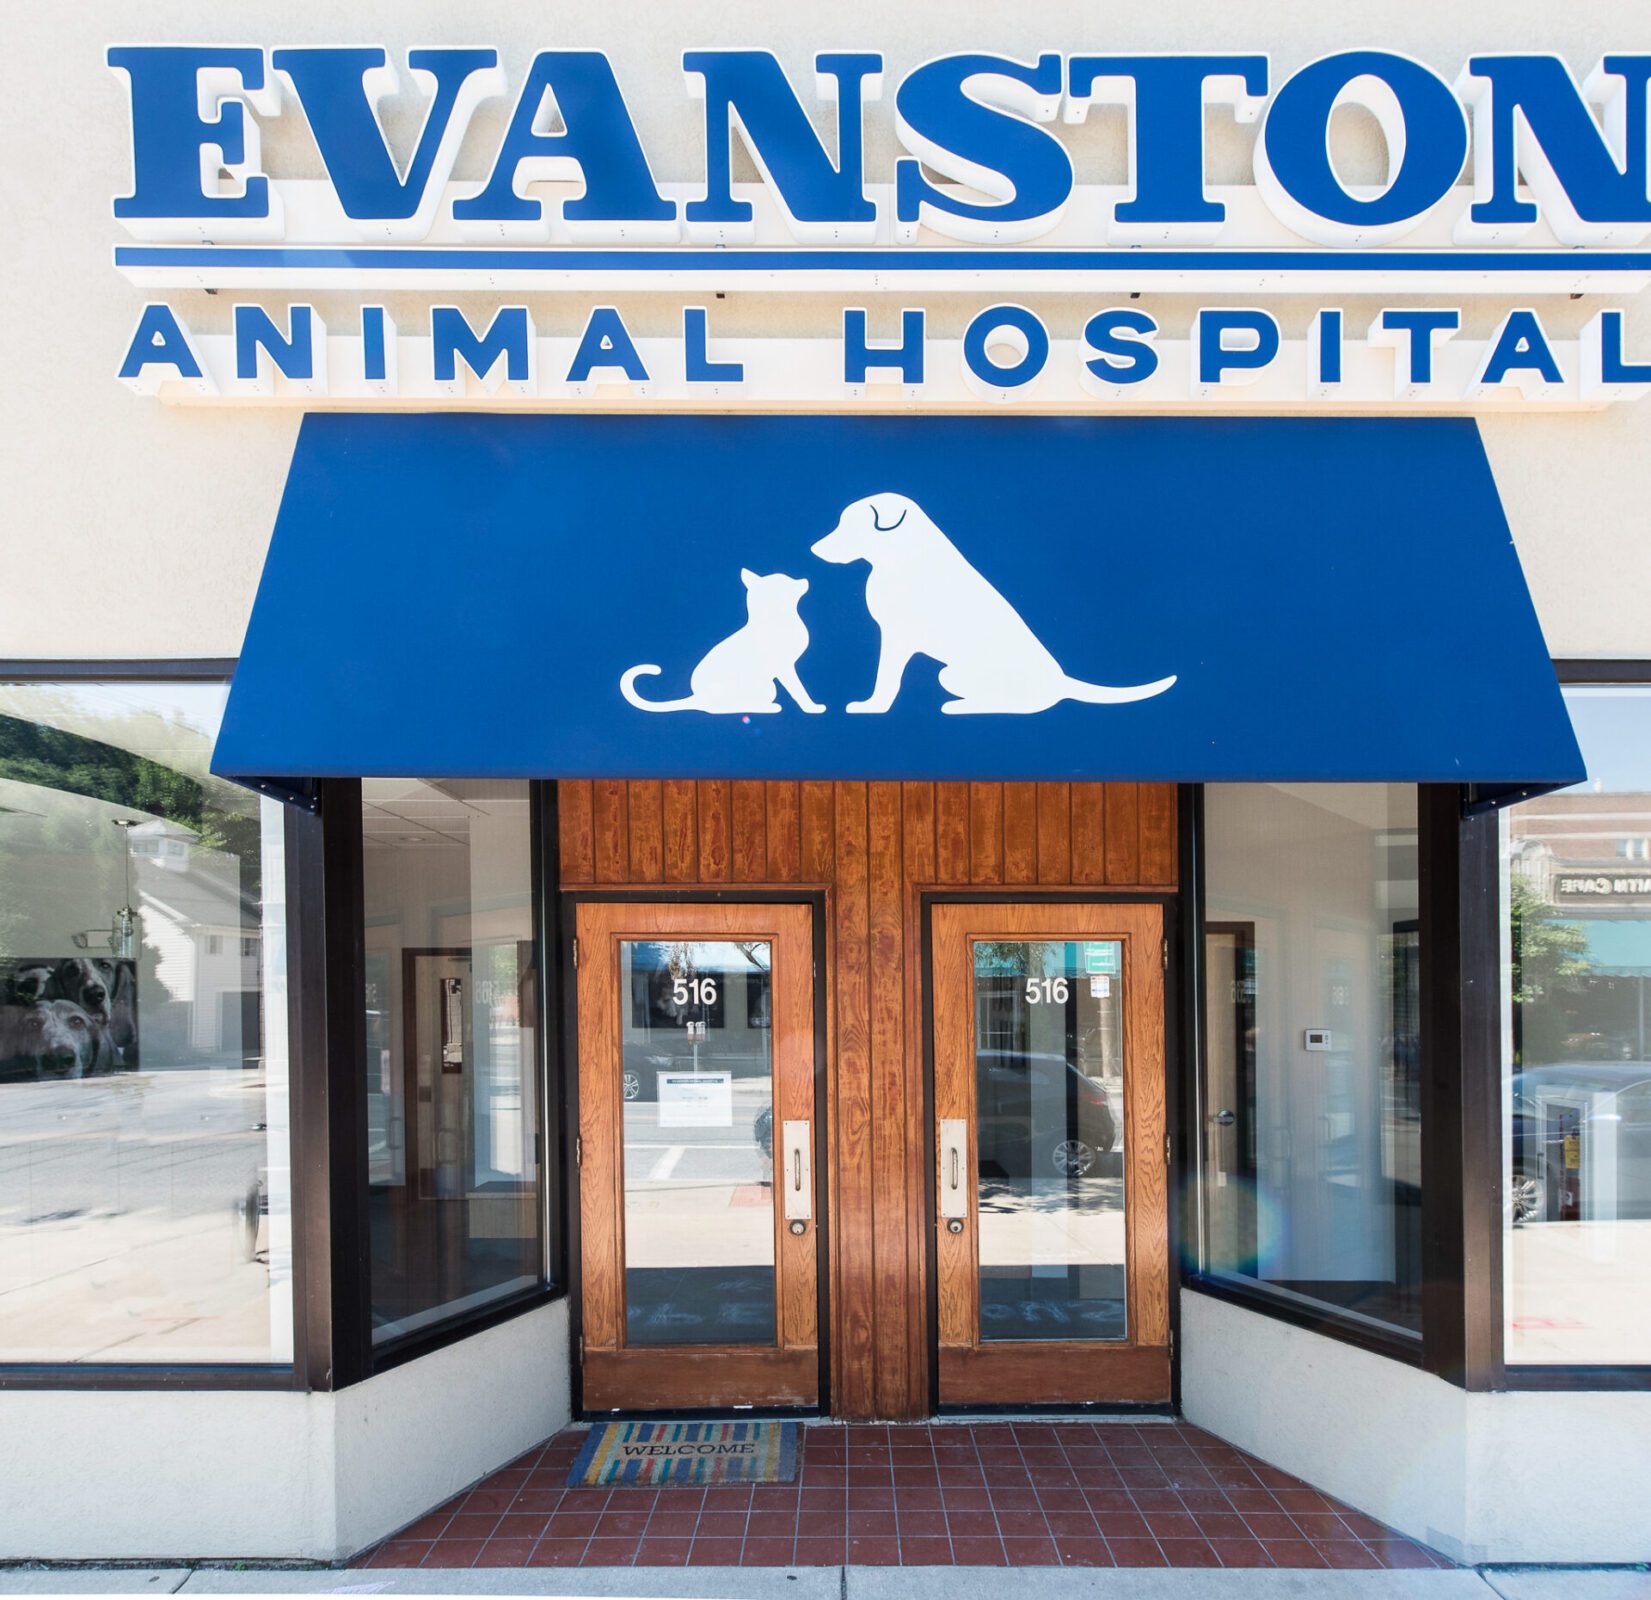 Evanston Animal Hospital exterior image of main entrance.